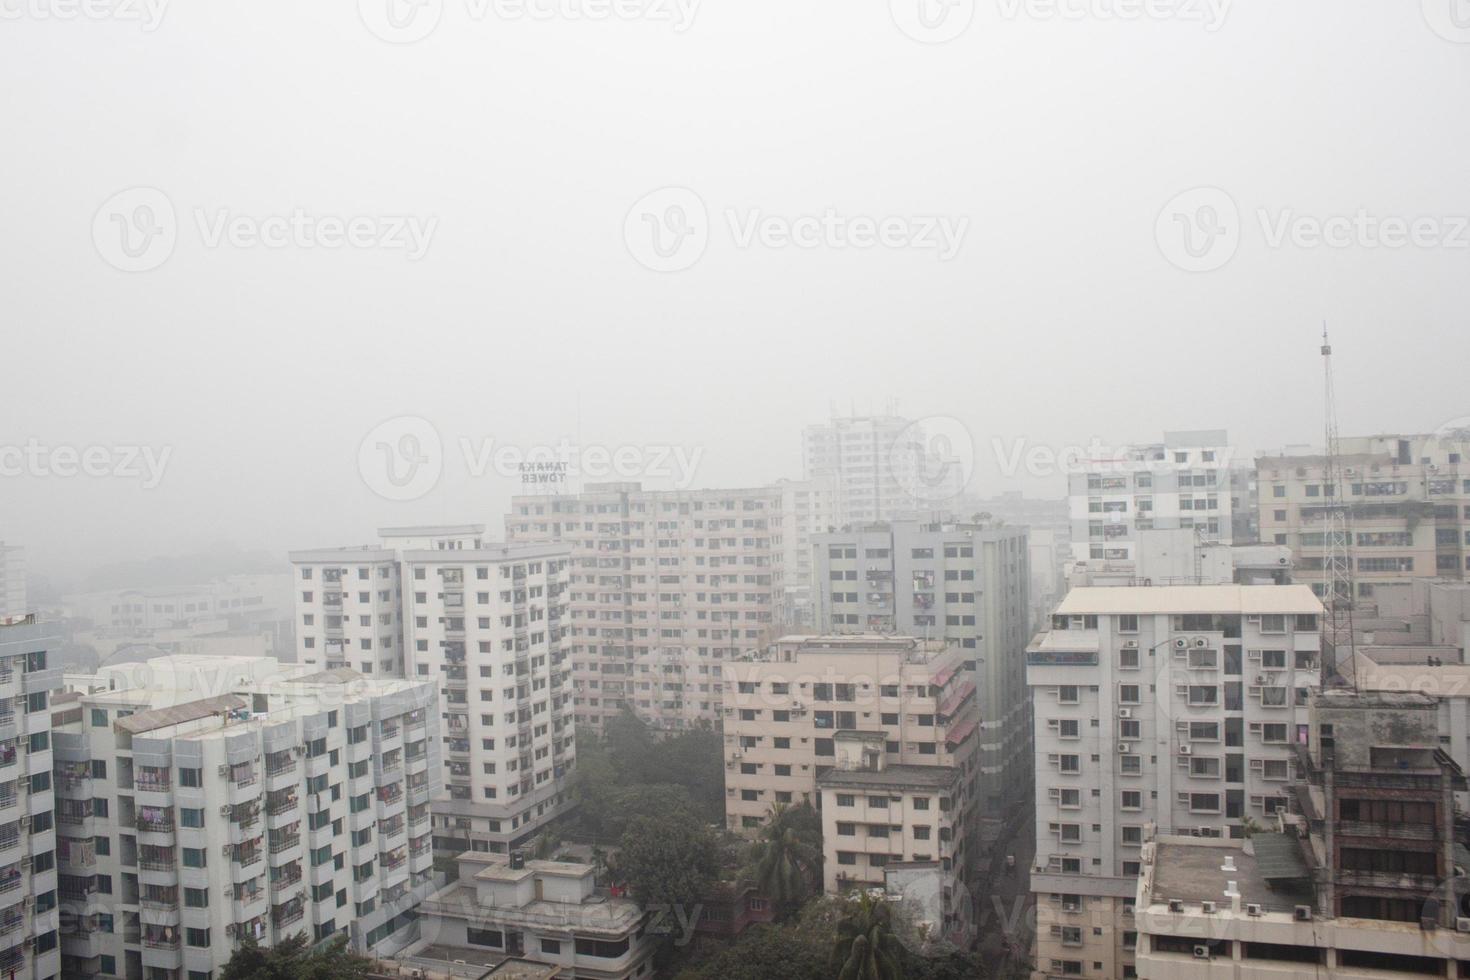 winter middag antenne keer bekeken van Dhaka stad. zwaar mistig winter kruis van de stad van dhaka. foto